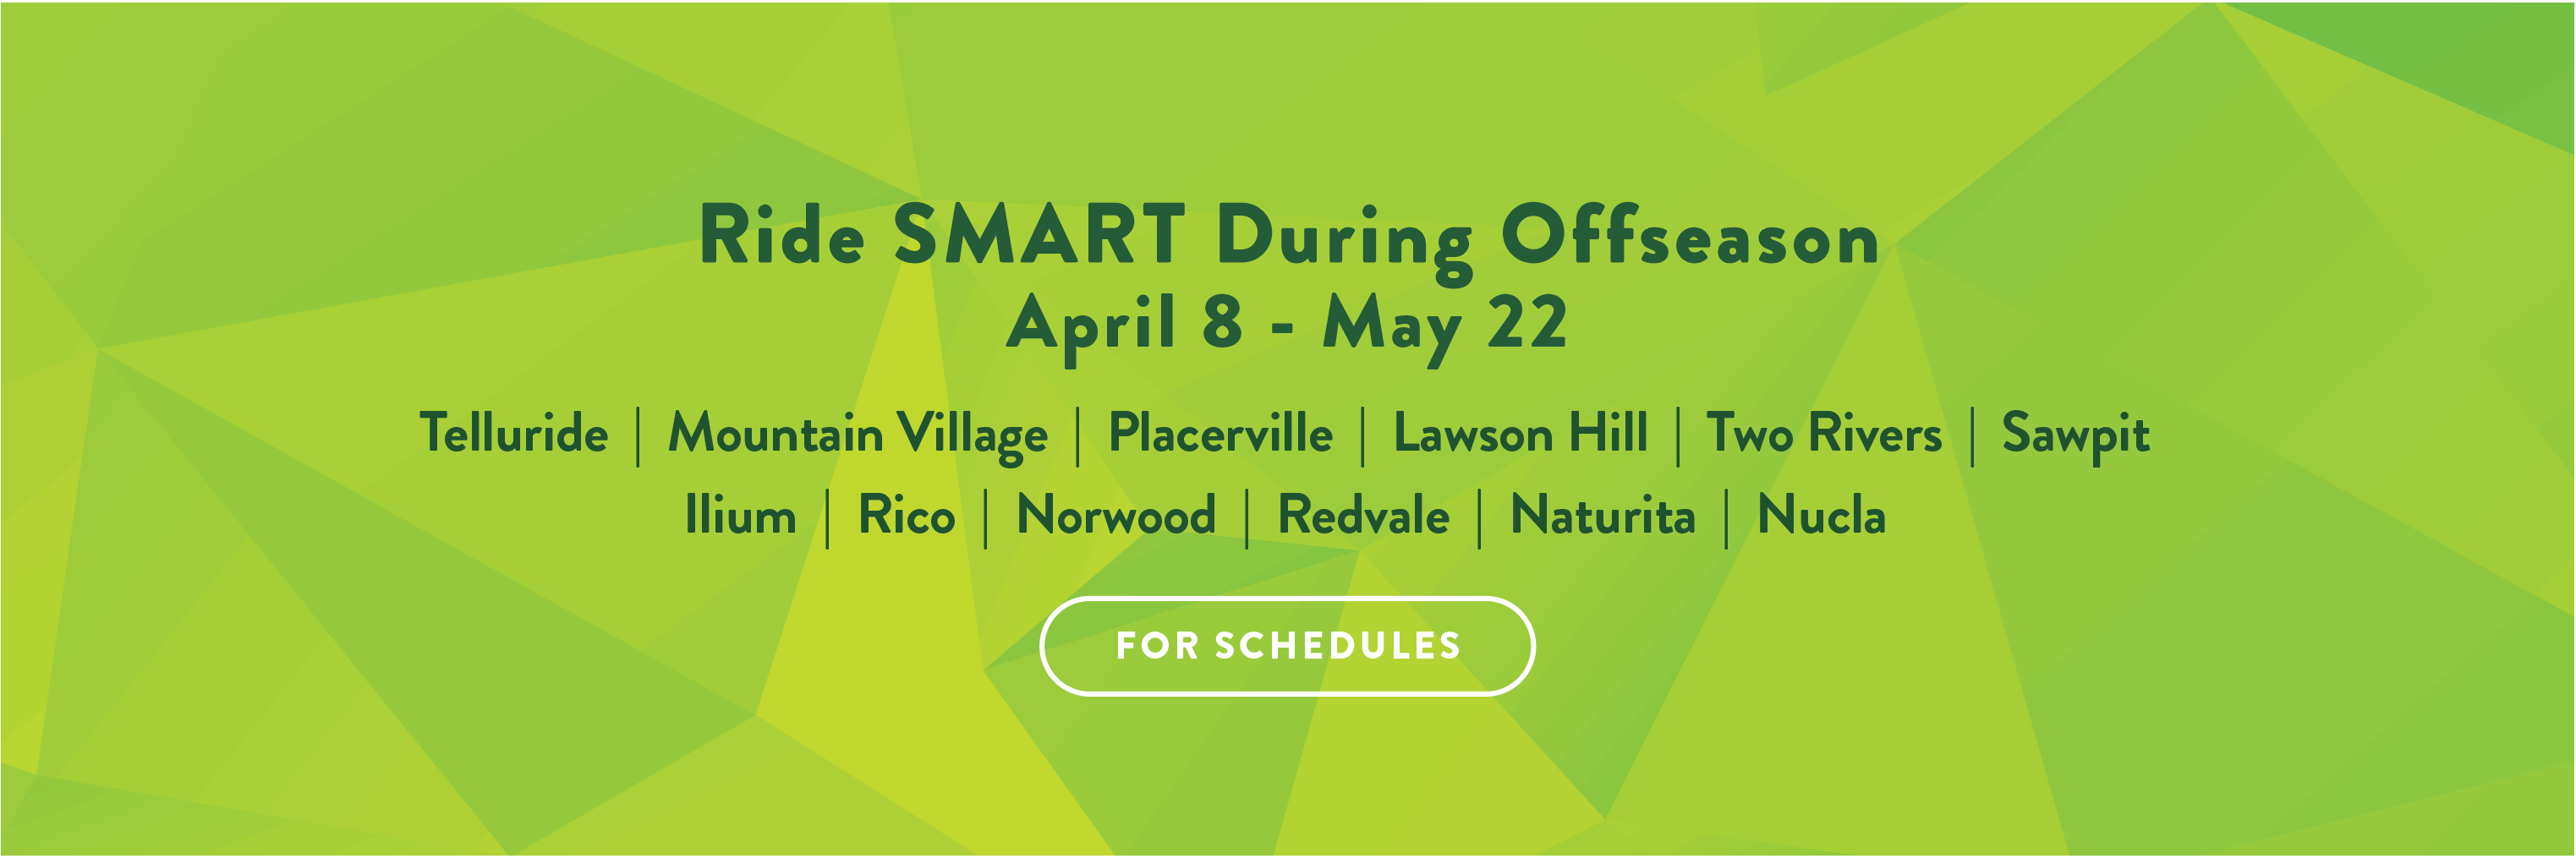 Ride SMART During Offseason April 8 Through May 22